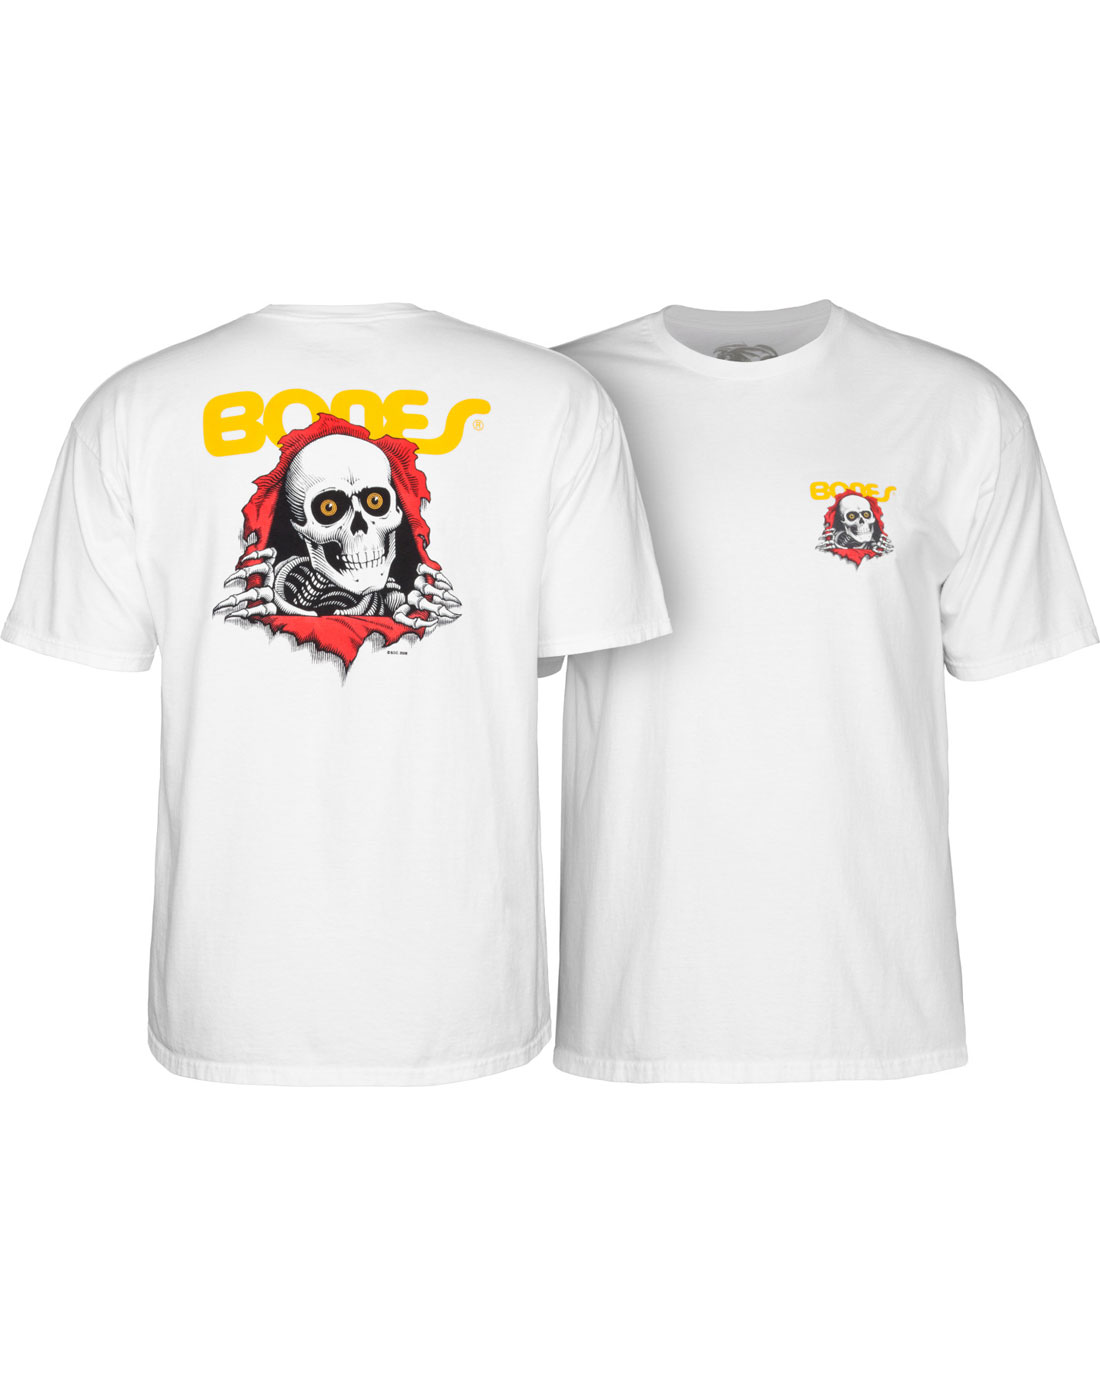 Ripper Powell Peralta T-Shirt (White) for Men | Xtreme